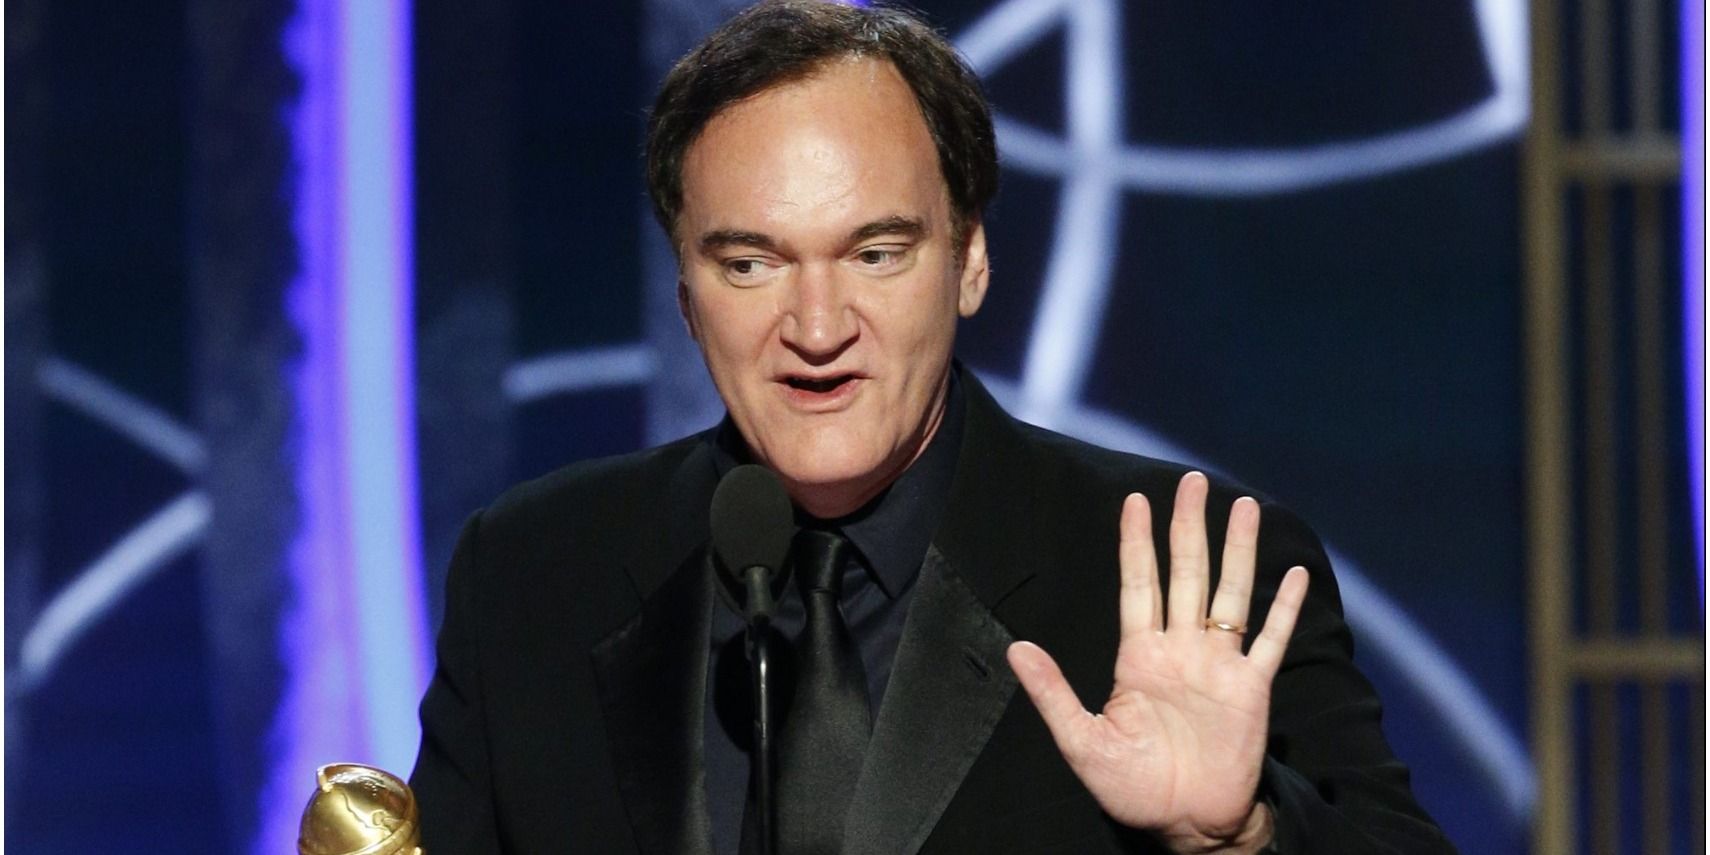 Quentin Tarantino Awards Show